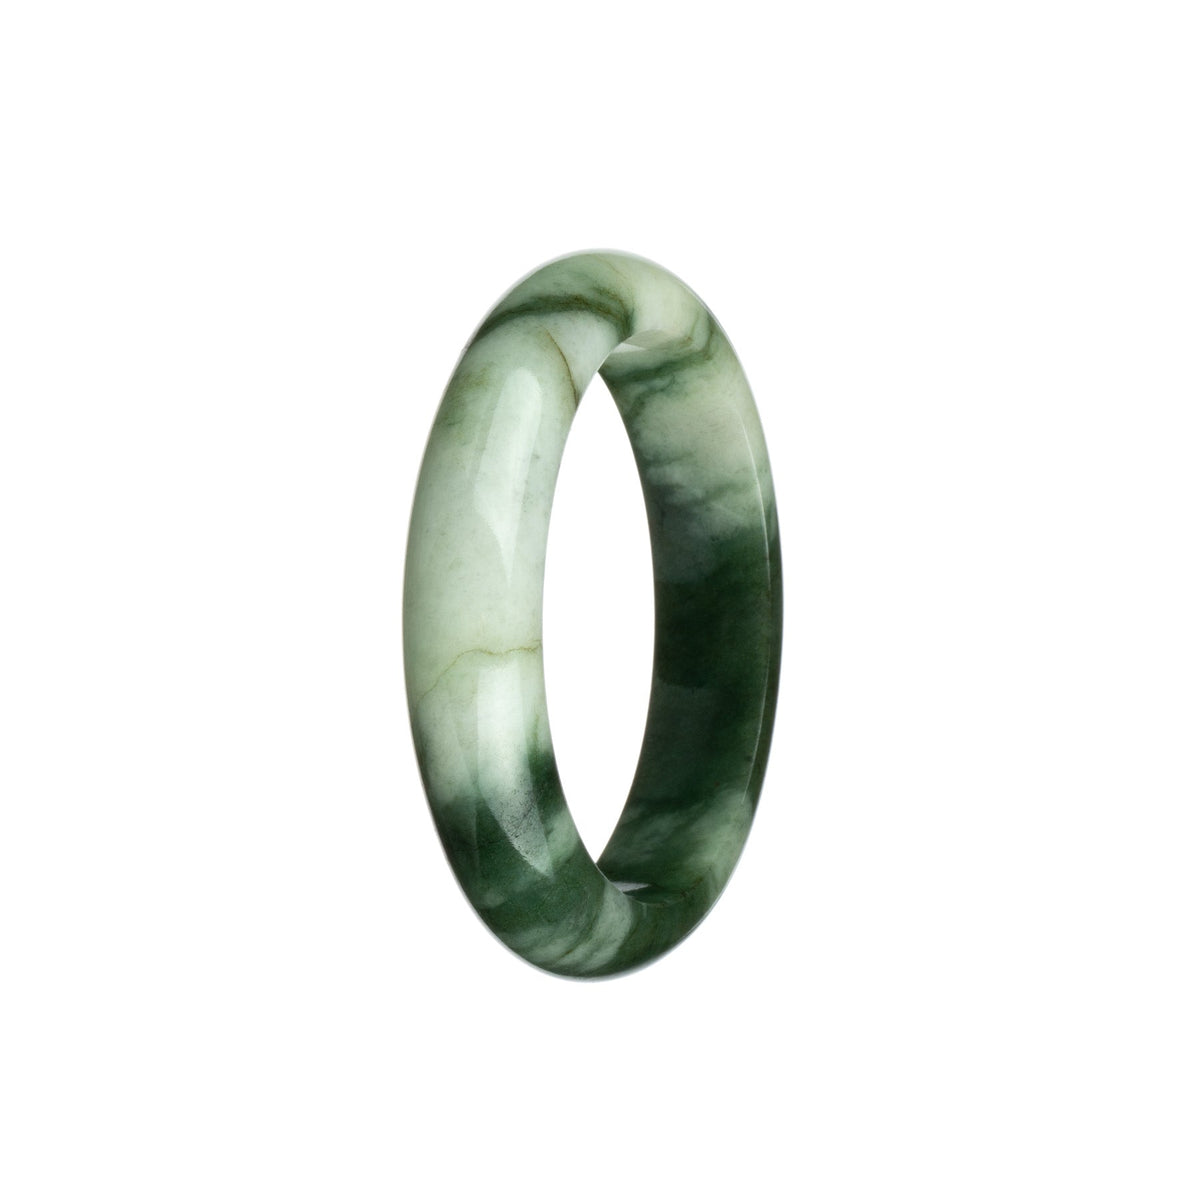 Certified Grade A Olive Green and White Jadeite Jade Bangle Bracelet - 53mm Half Moon